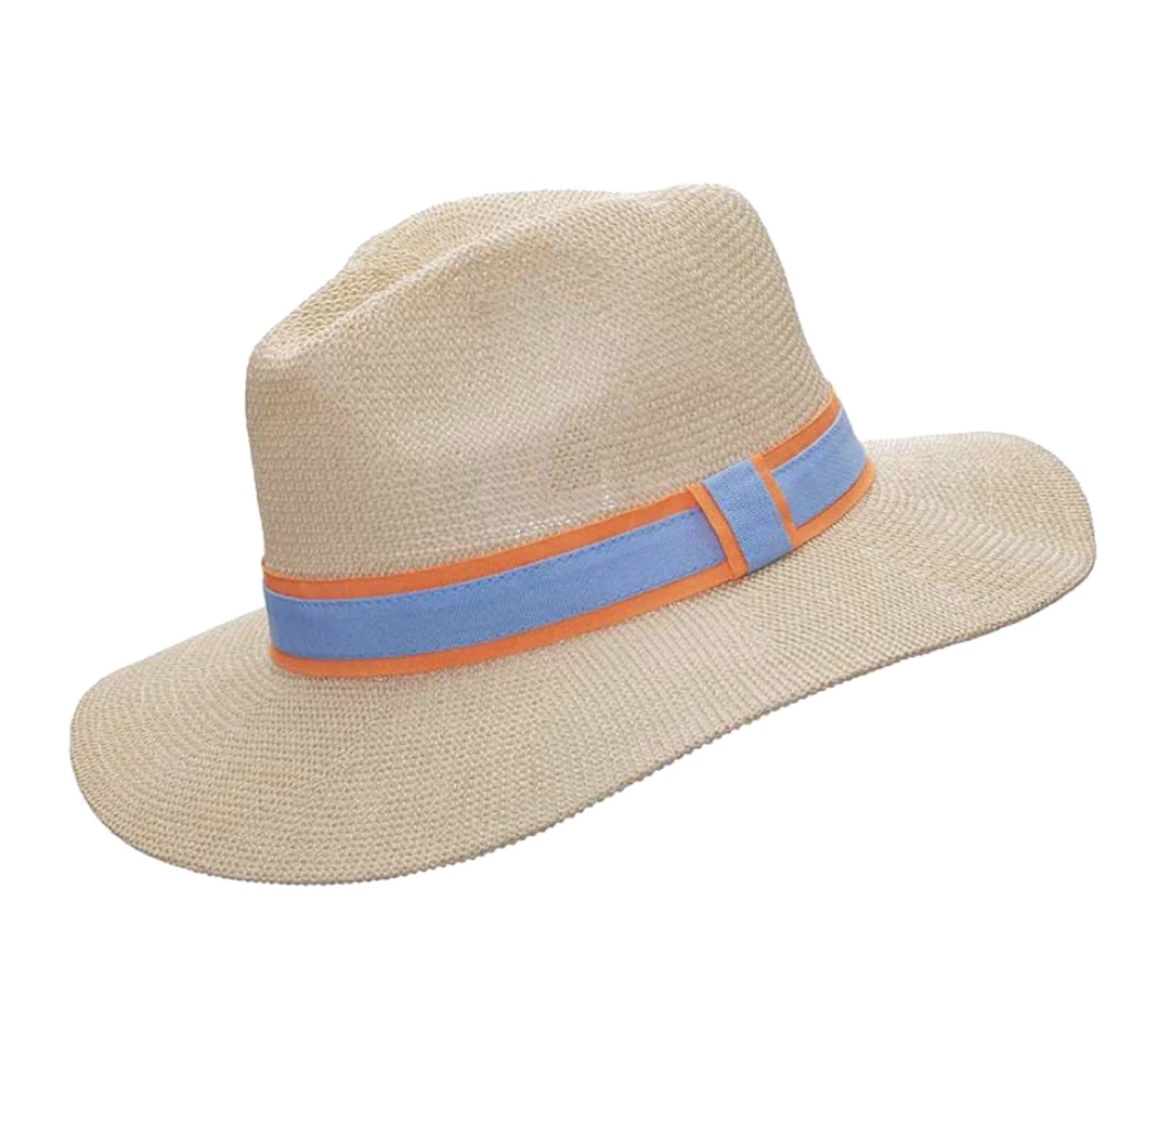 Somerville Panama Sun Hat - Oranage/ Blue